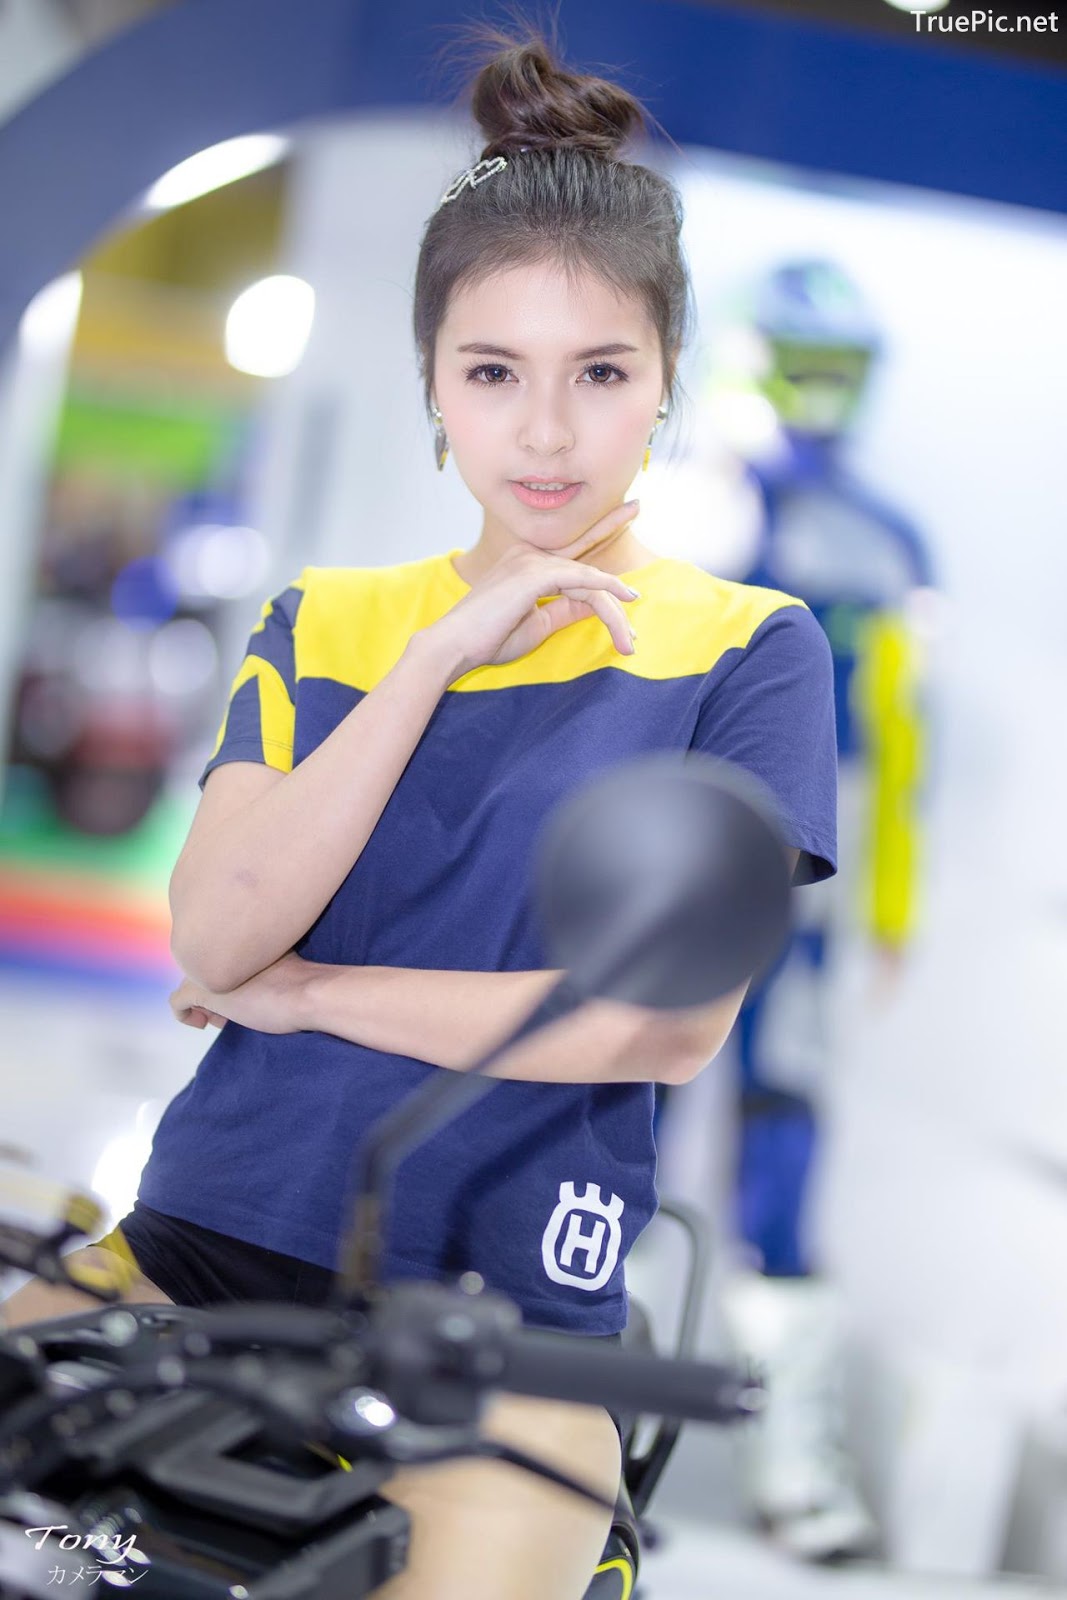 Image-Thailand-Hot-Model-Thai-Racing-Girl-At-Big-Motor-2018-TruePic.net- Picture-60